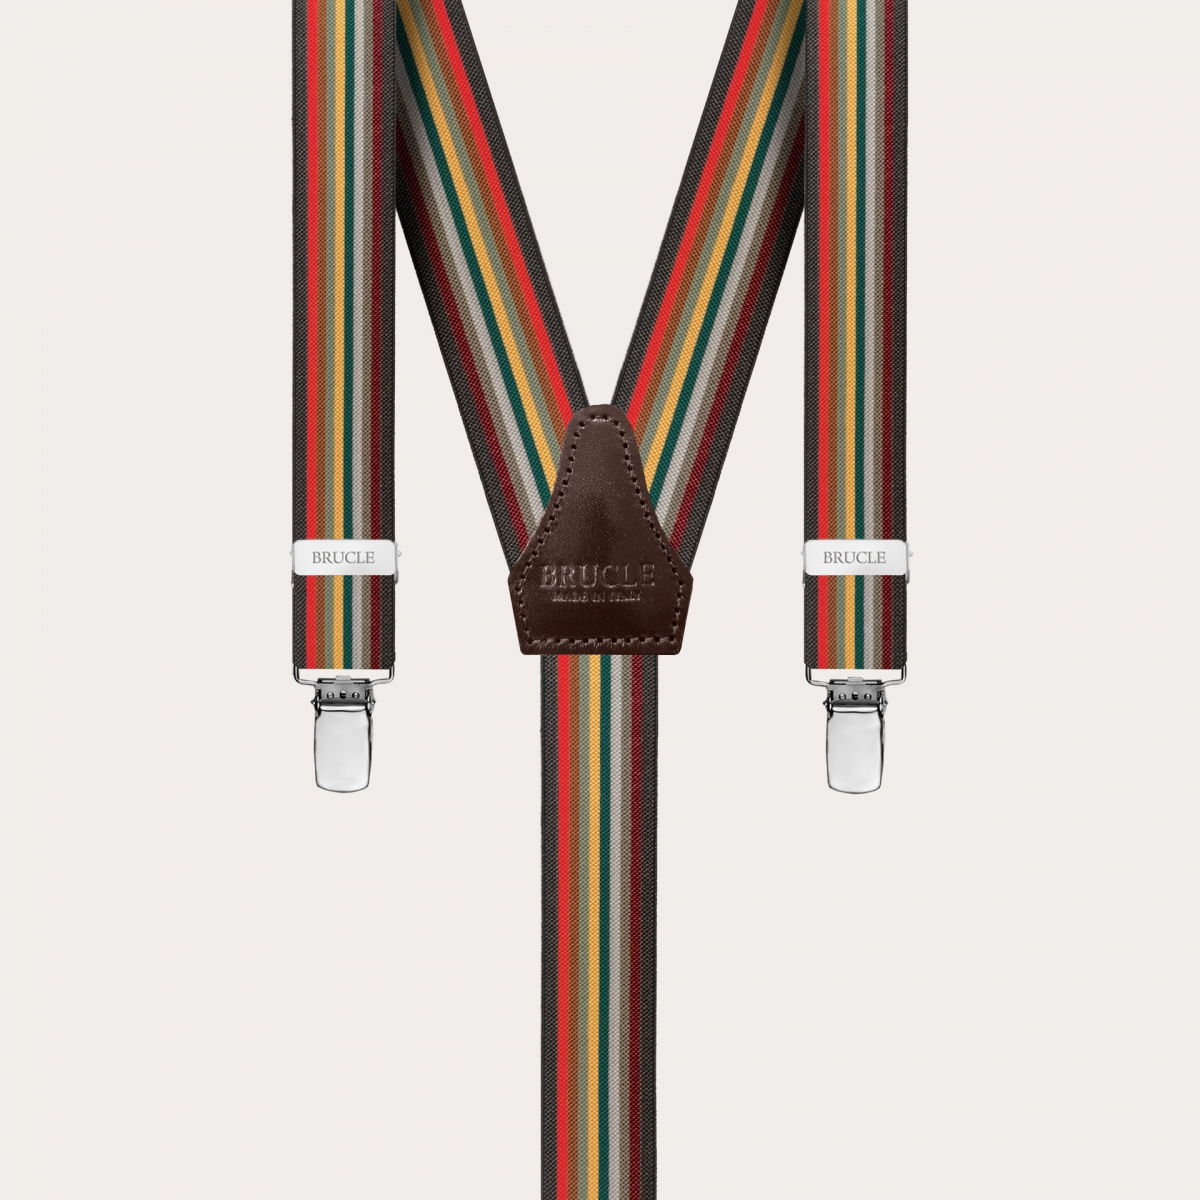 BRUCLE braces suspenders striped multicolored